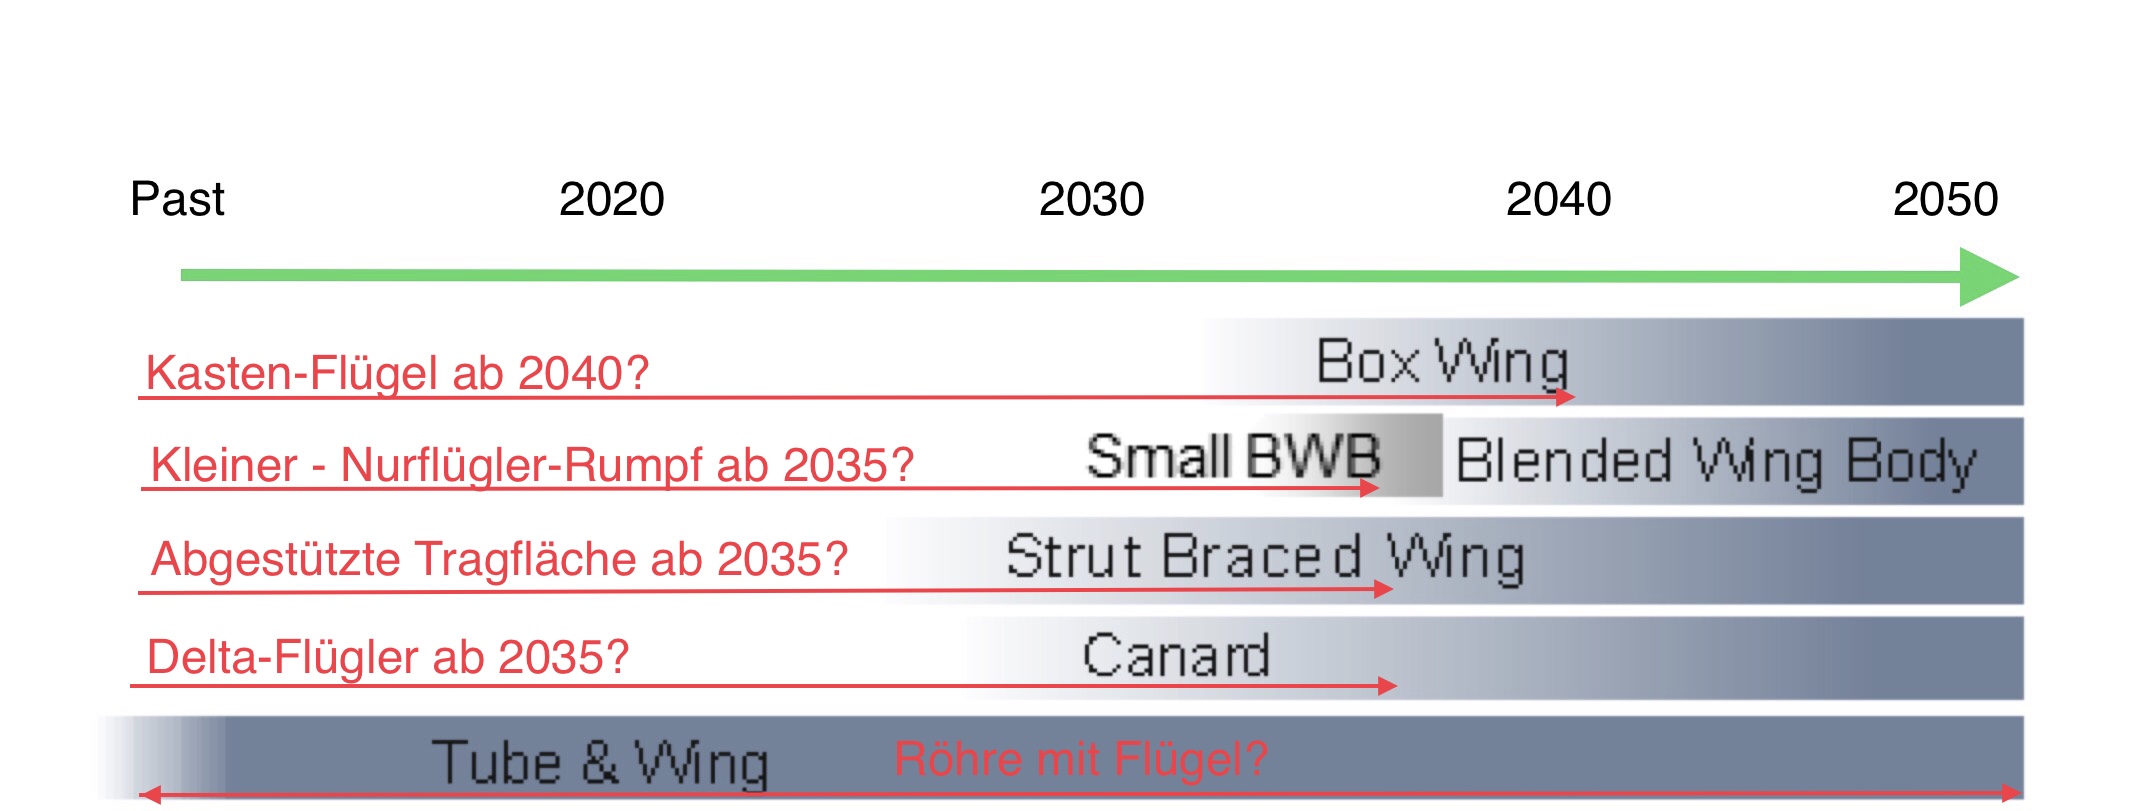 IATA Aircraft Technology Roadmap to 2050